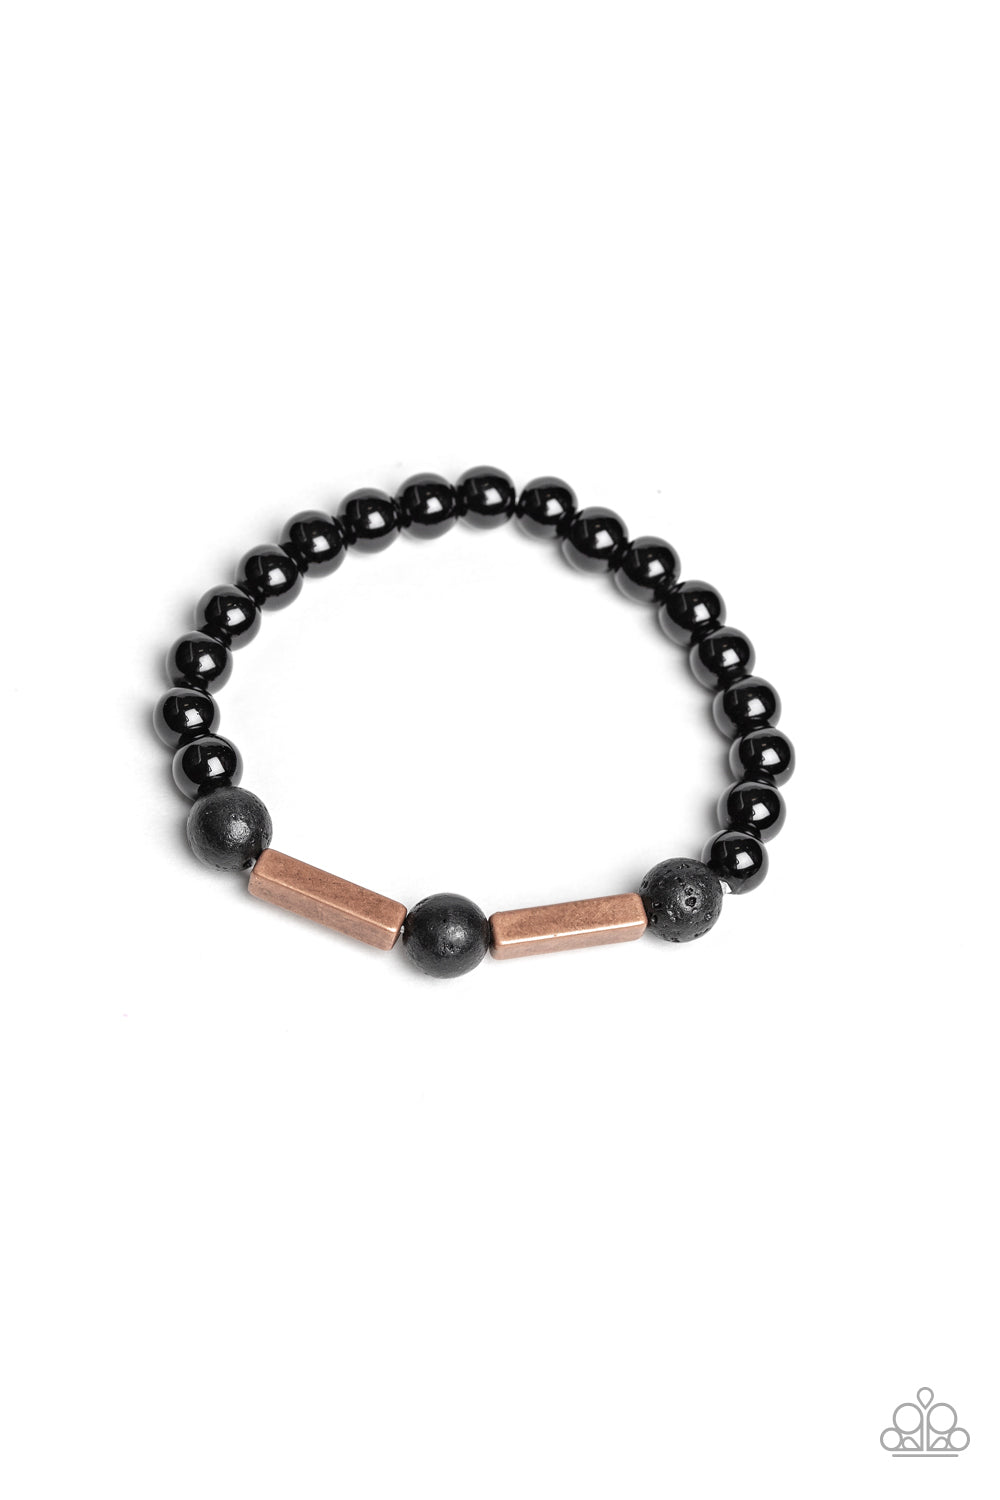 Metro Meditation Bracelet - Copper